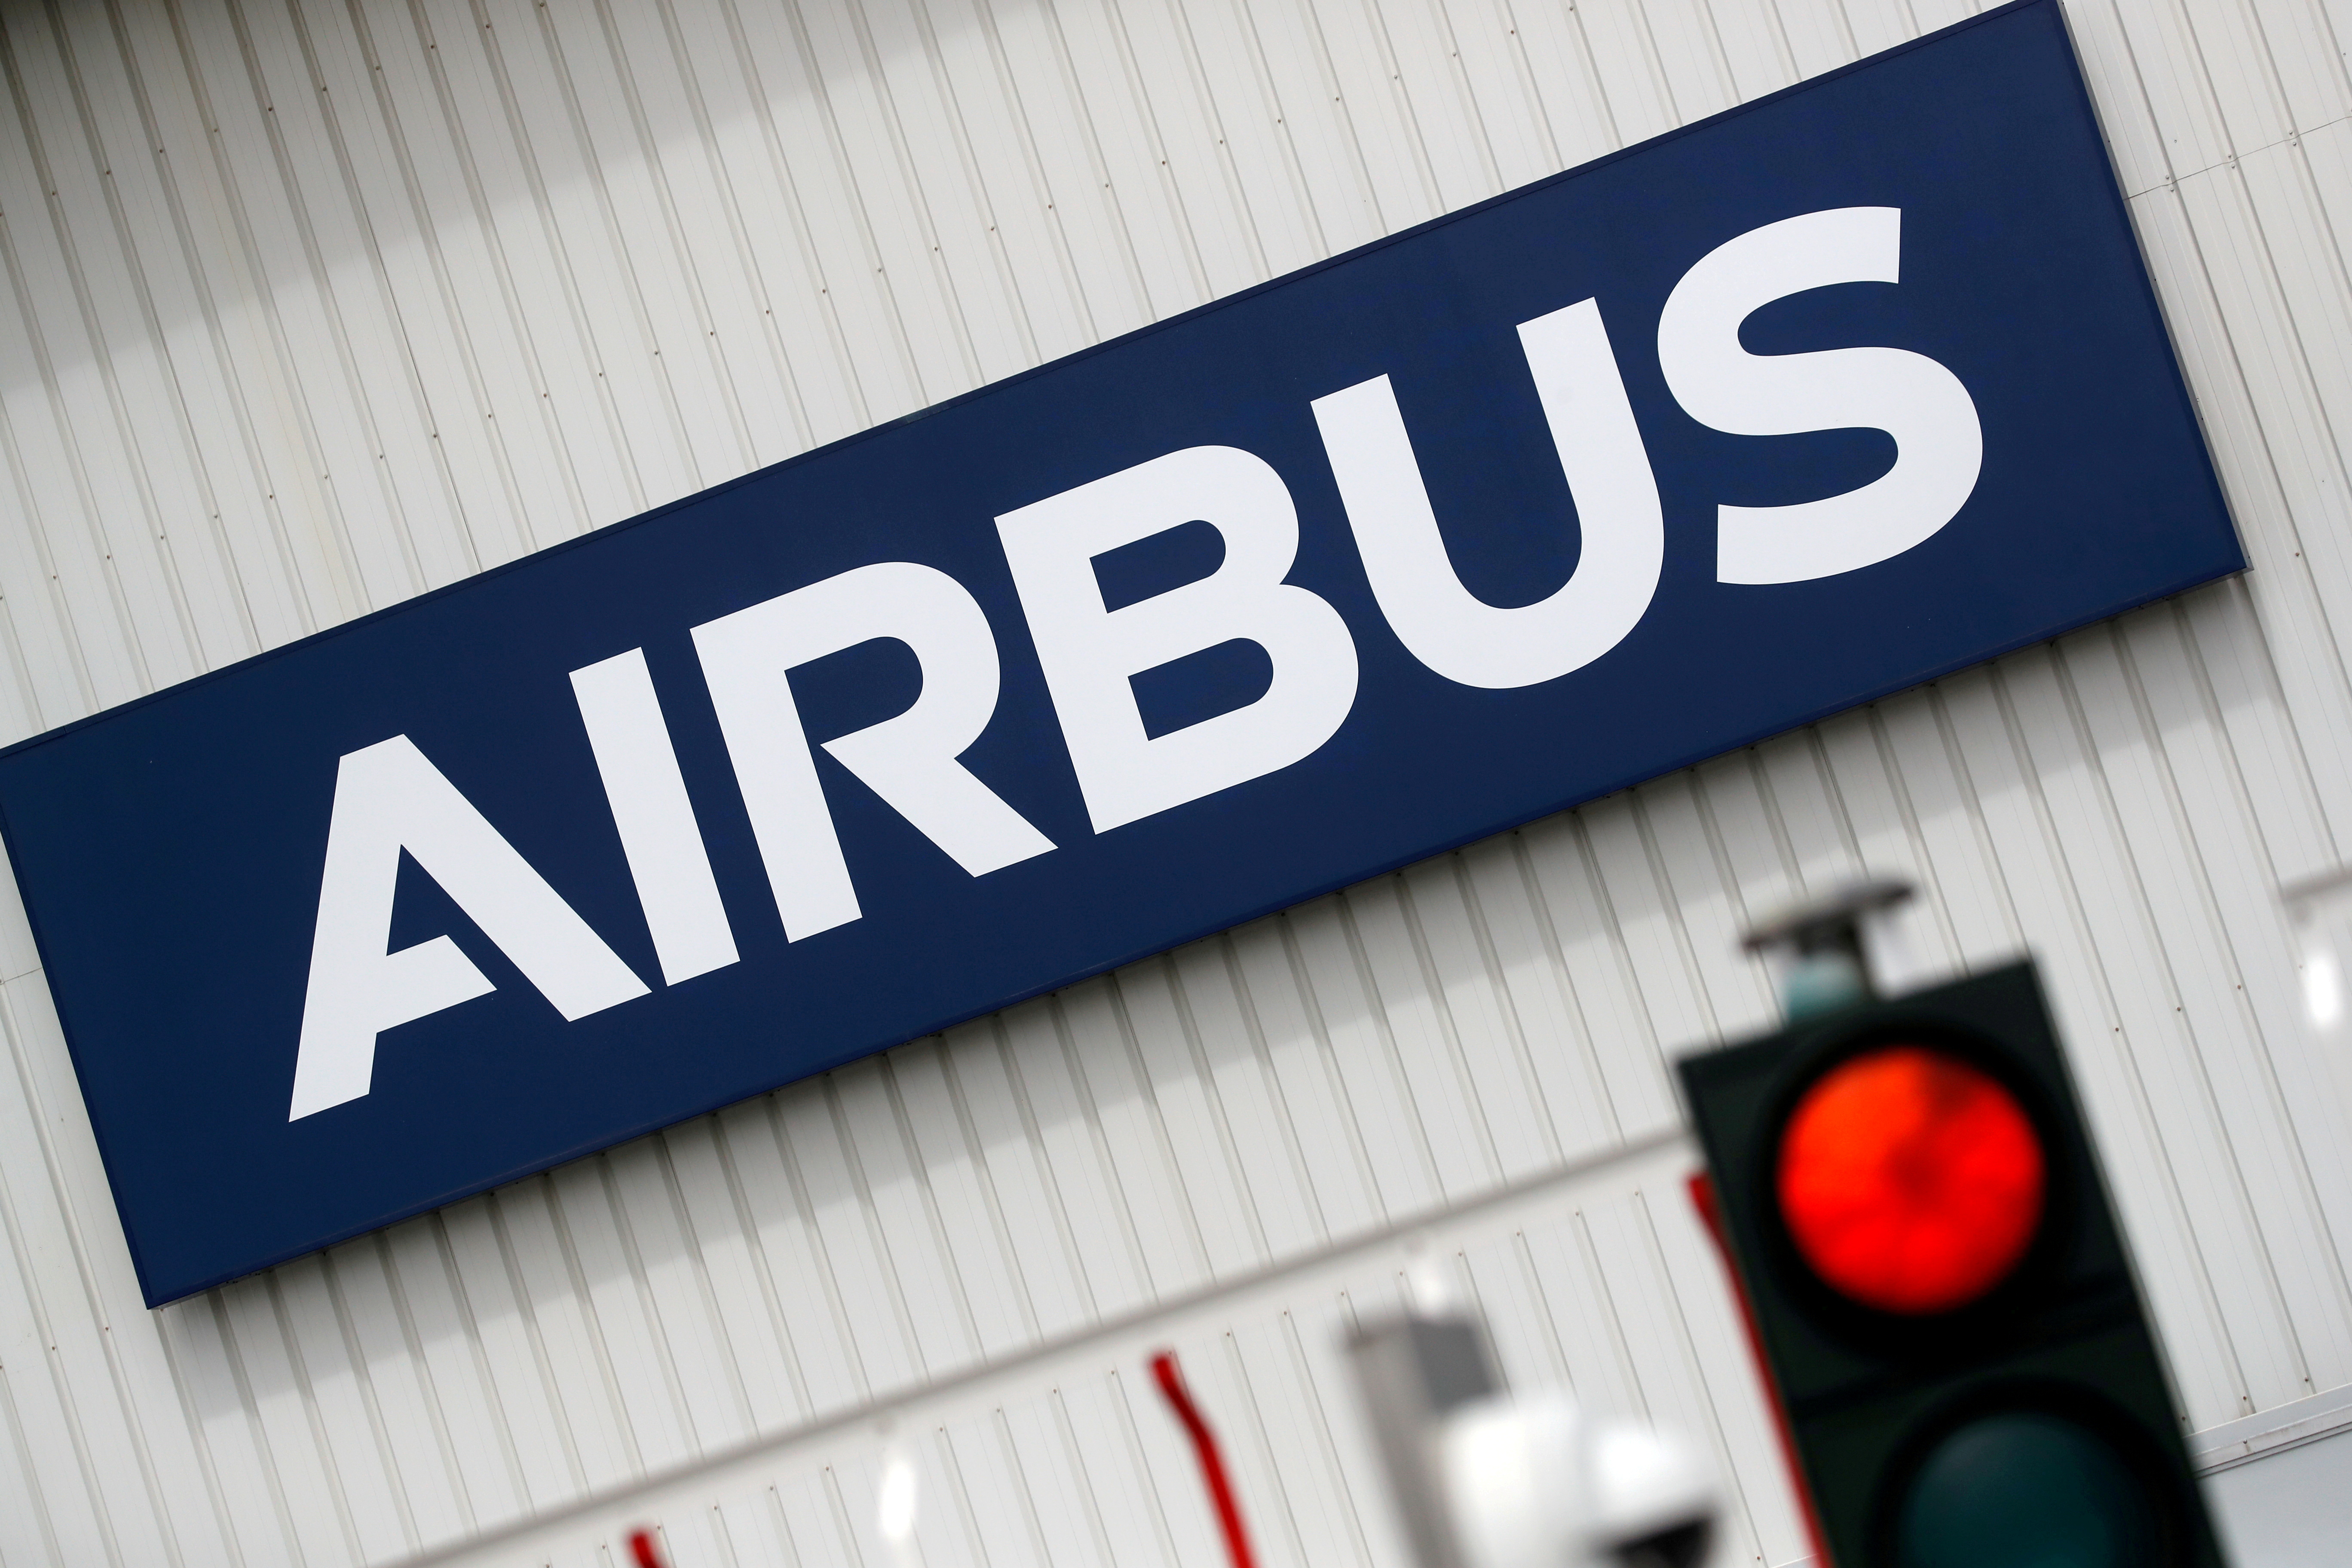 Airbus logo at the entrance of the Airbus facility in Bouguenais